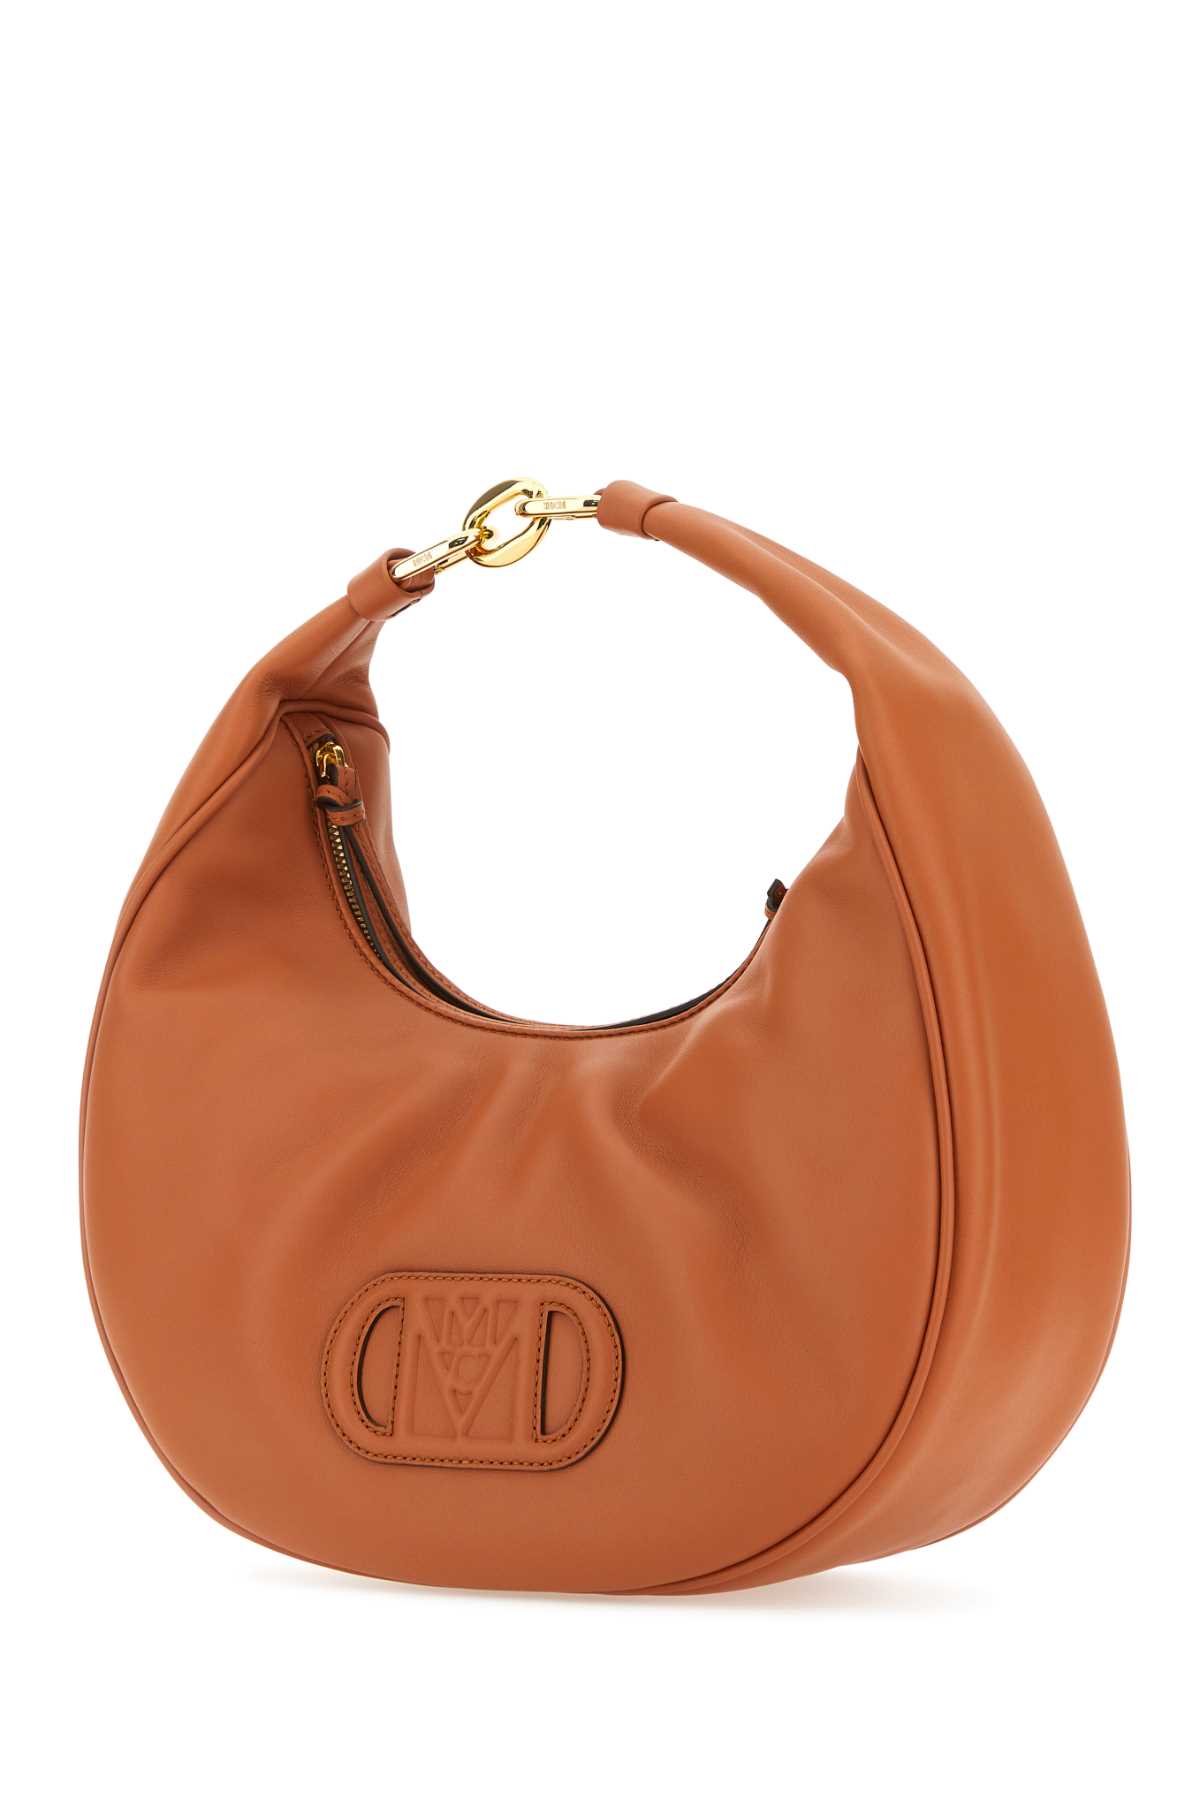 Mcm Caramel Nappa Leather Mode Travia Handbag In Co